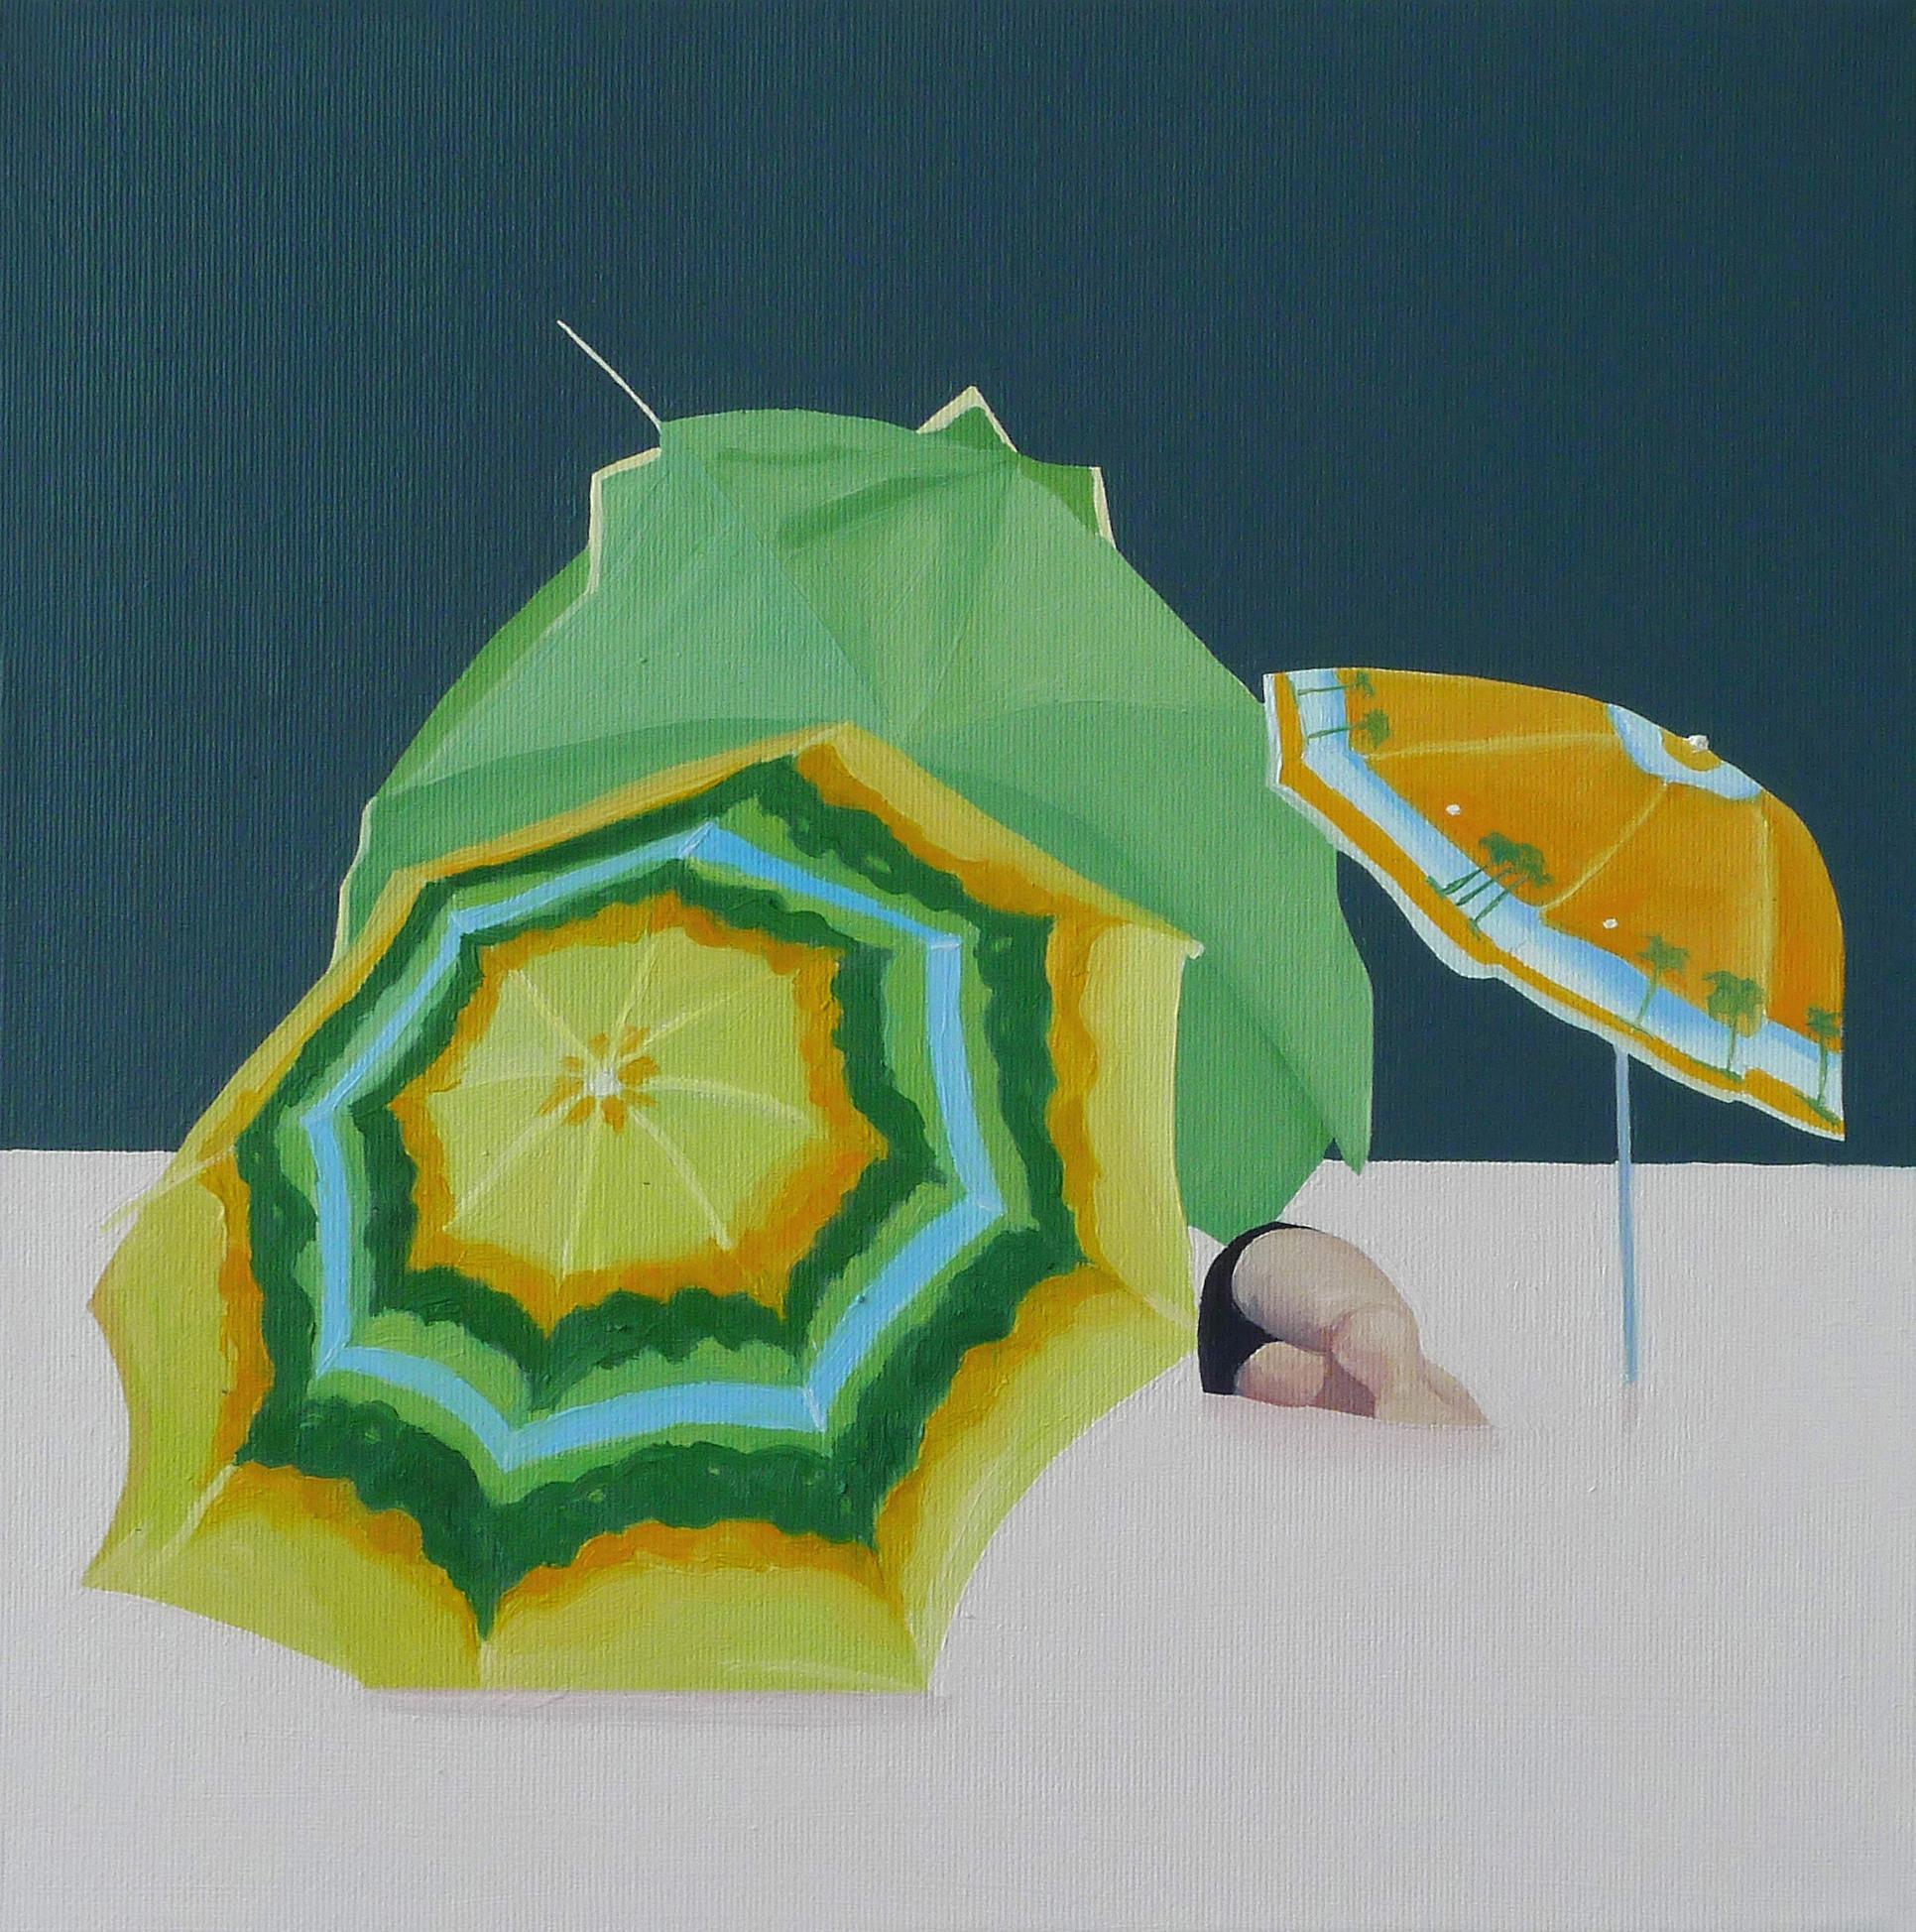 Sunshades - Contemporary Figurative Oil Painting, Beach View, Colourful, Joyful 